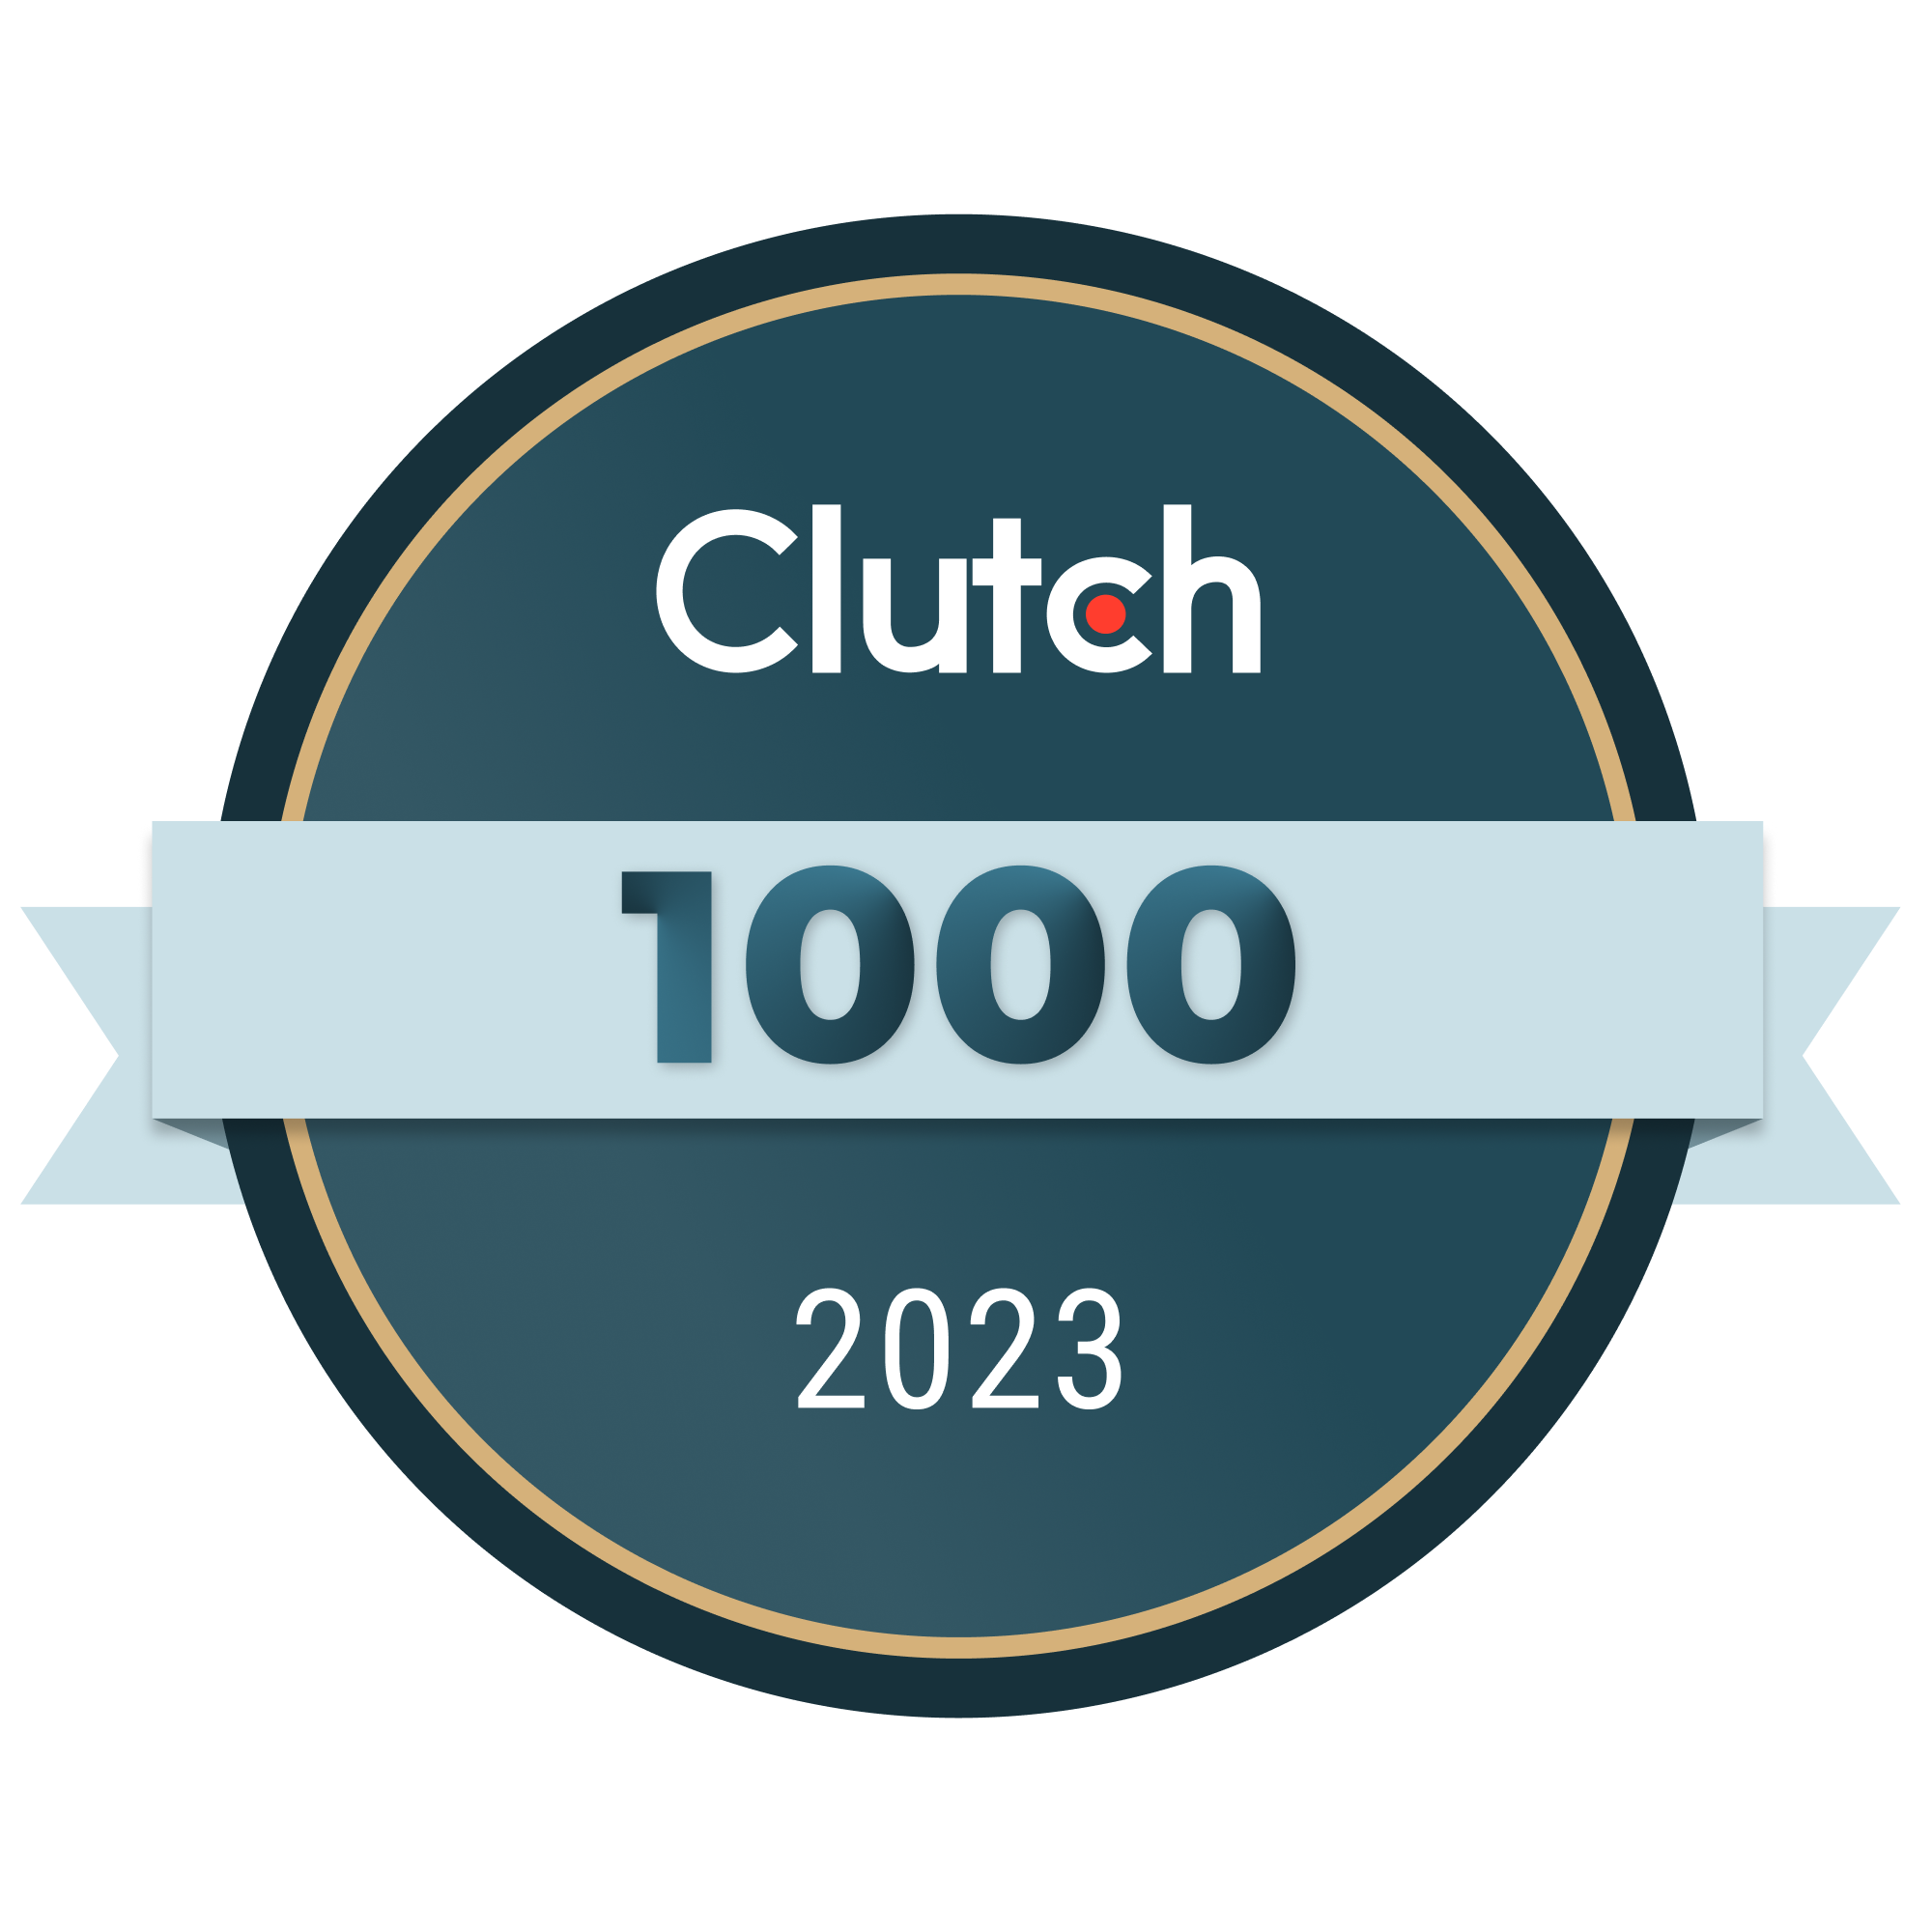 Clutch 1000 badge